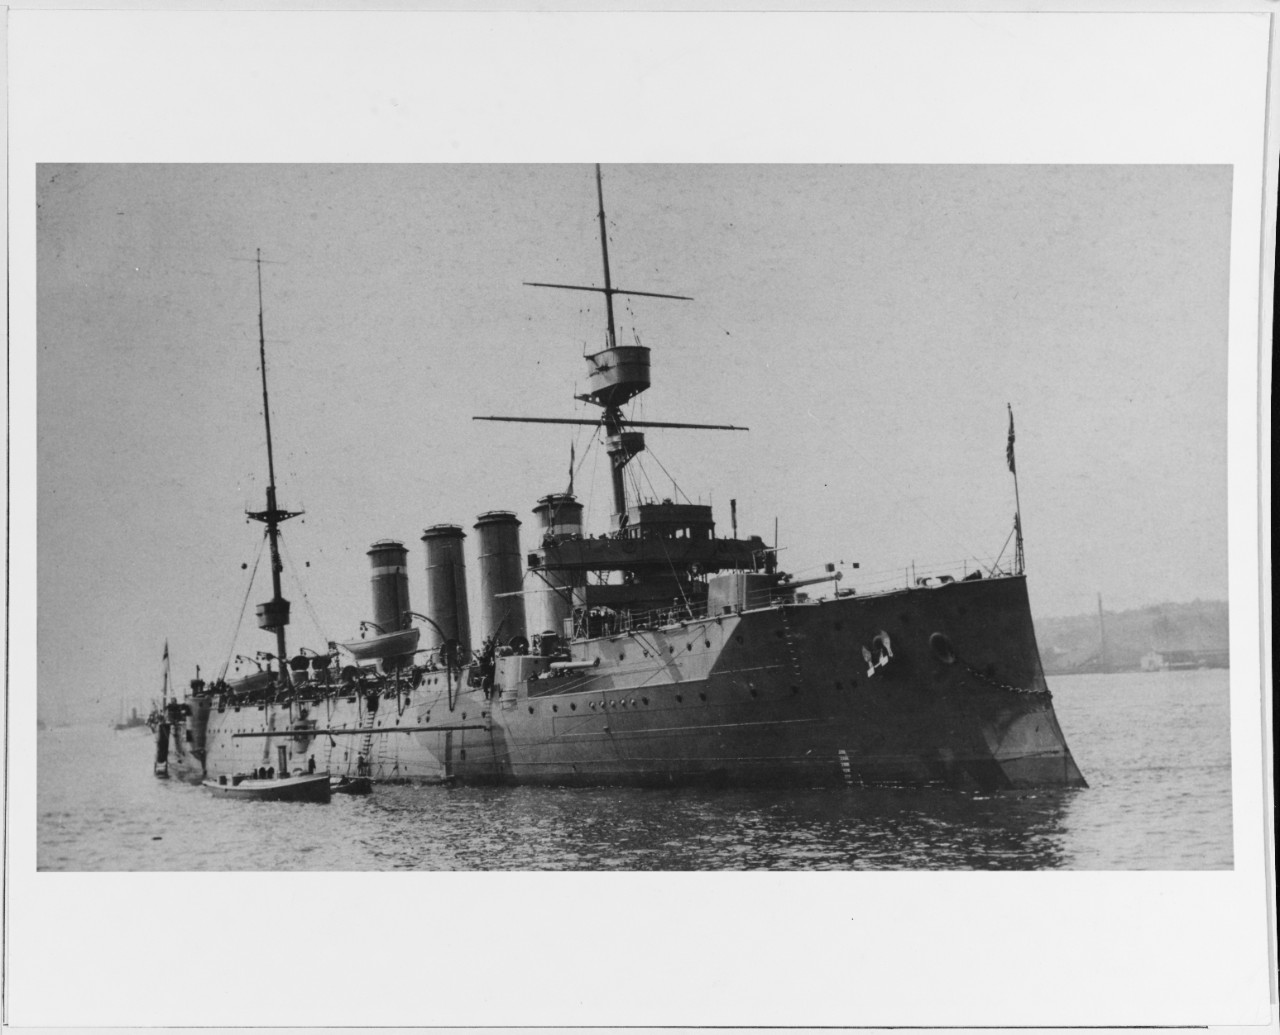 HMS ARGYLL (Armored cruiser of 1904)